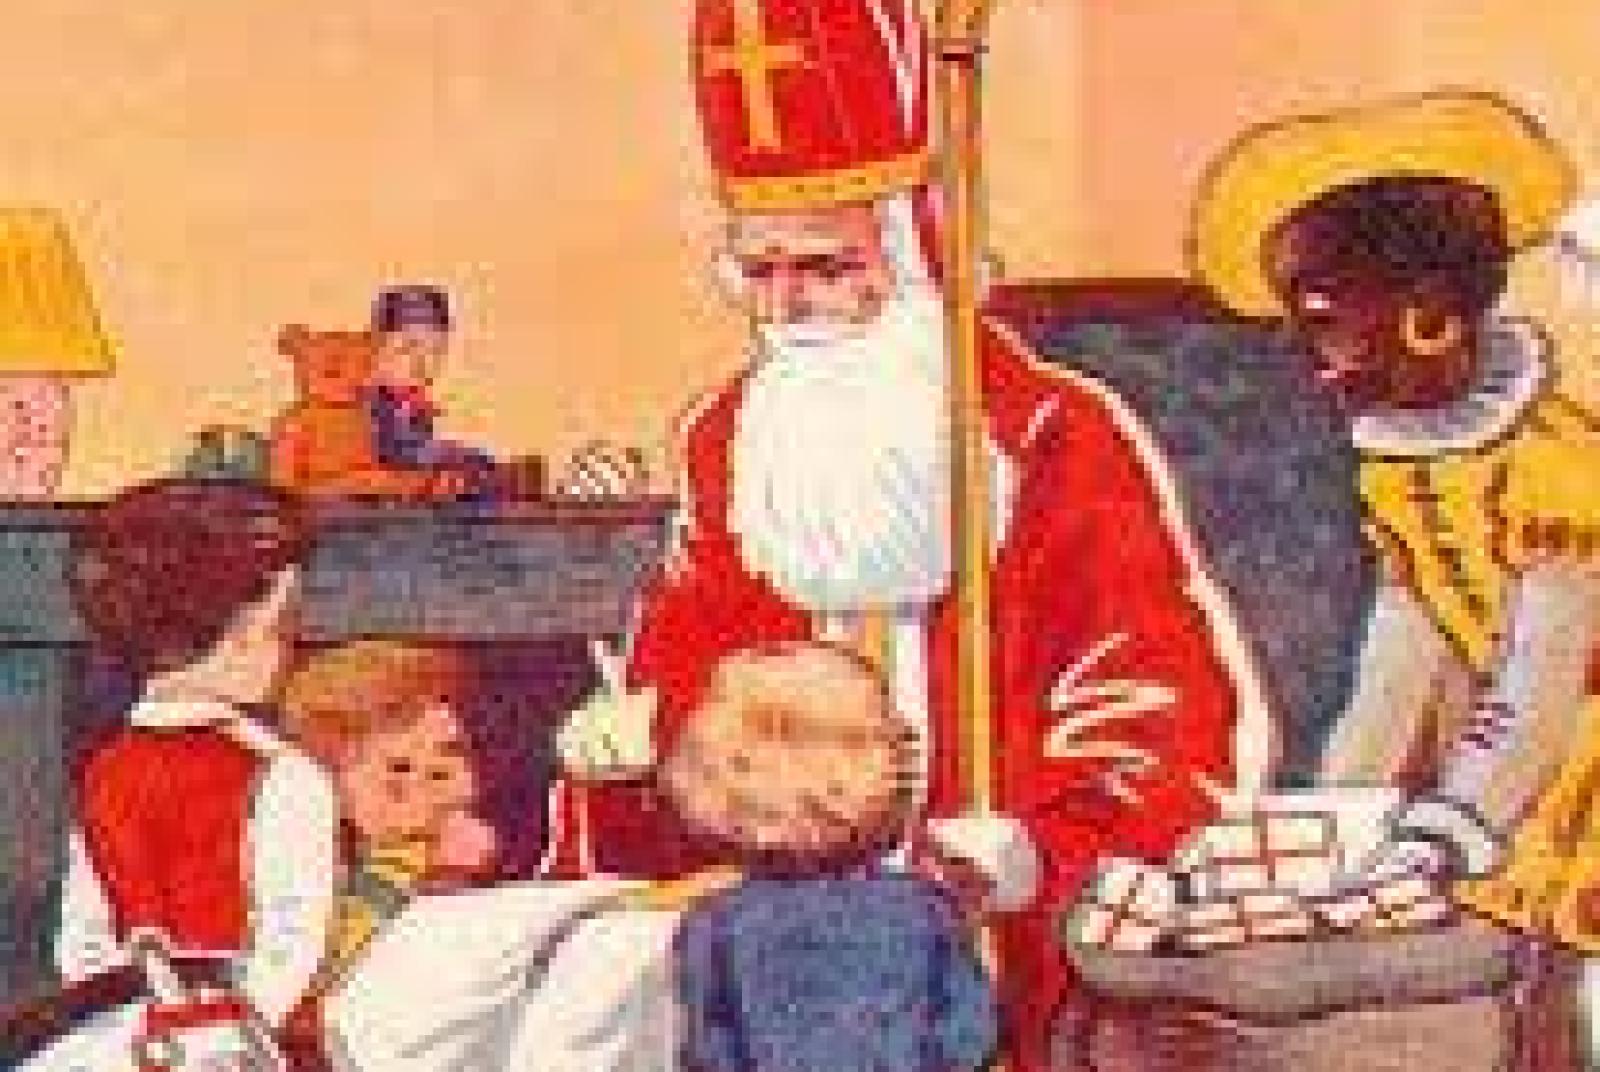 Festa di "San Kloas" - Festa di San Nicola